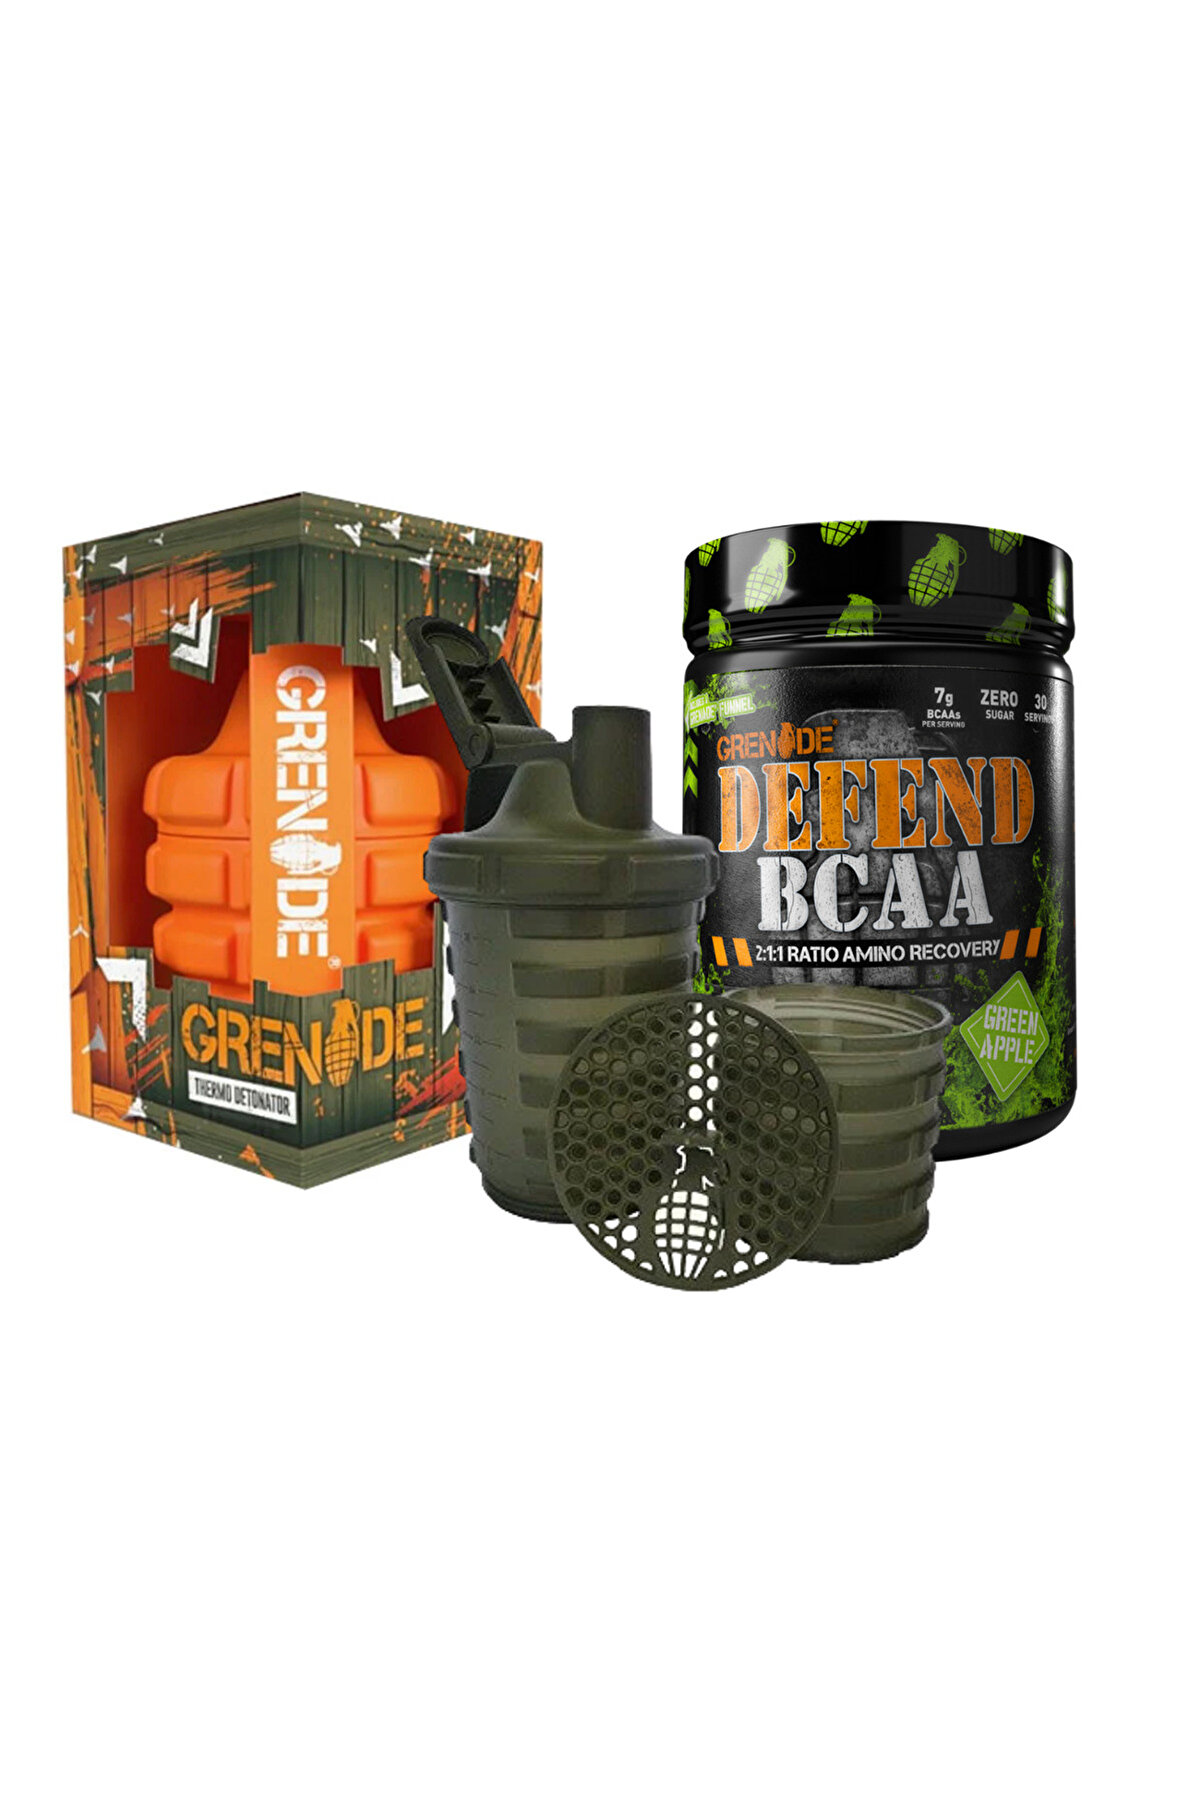 Grenade Thermo Detonator & Defend Bcaa Yeşil Elma Kombinasyonu